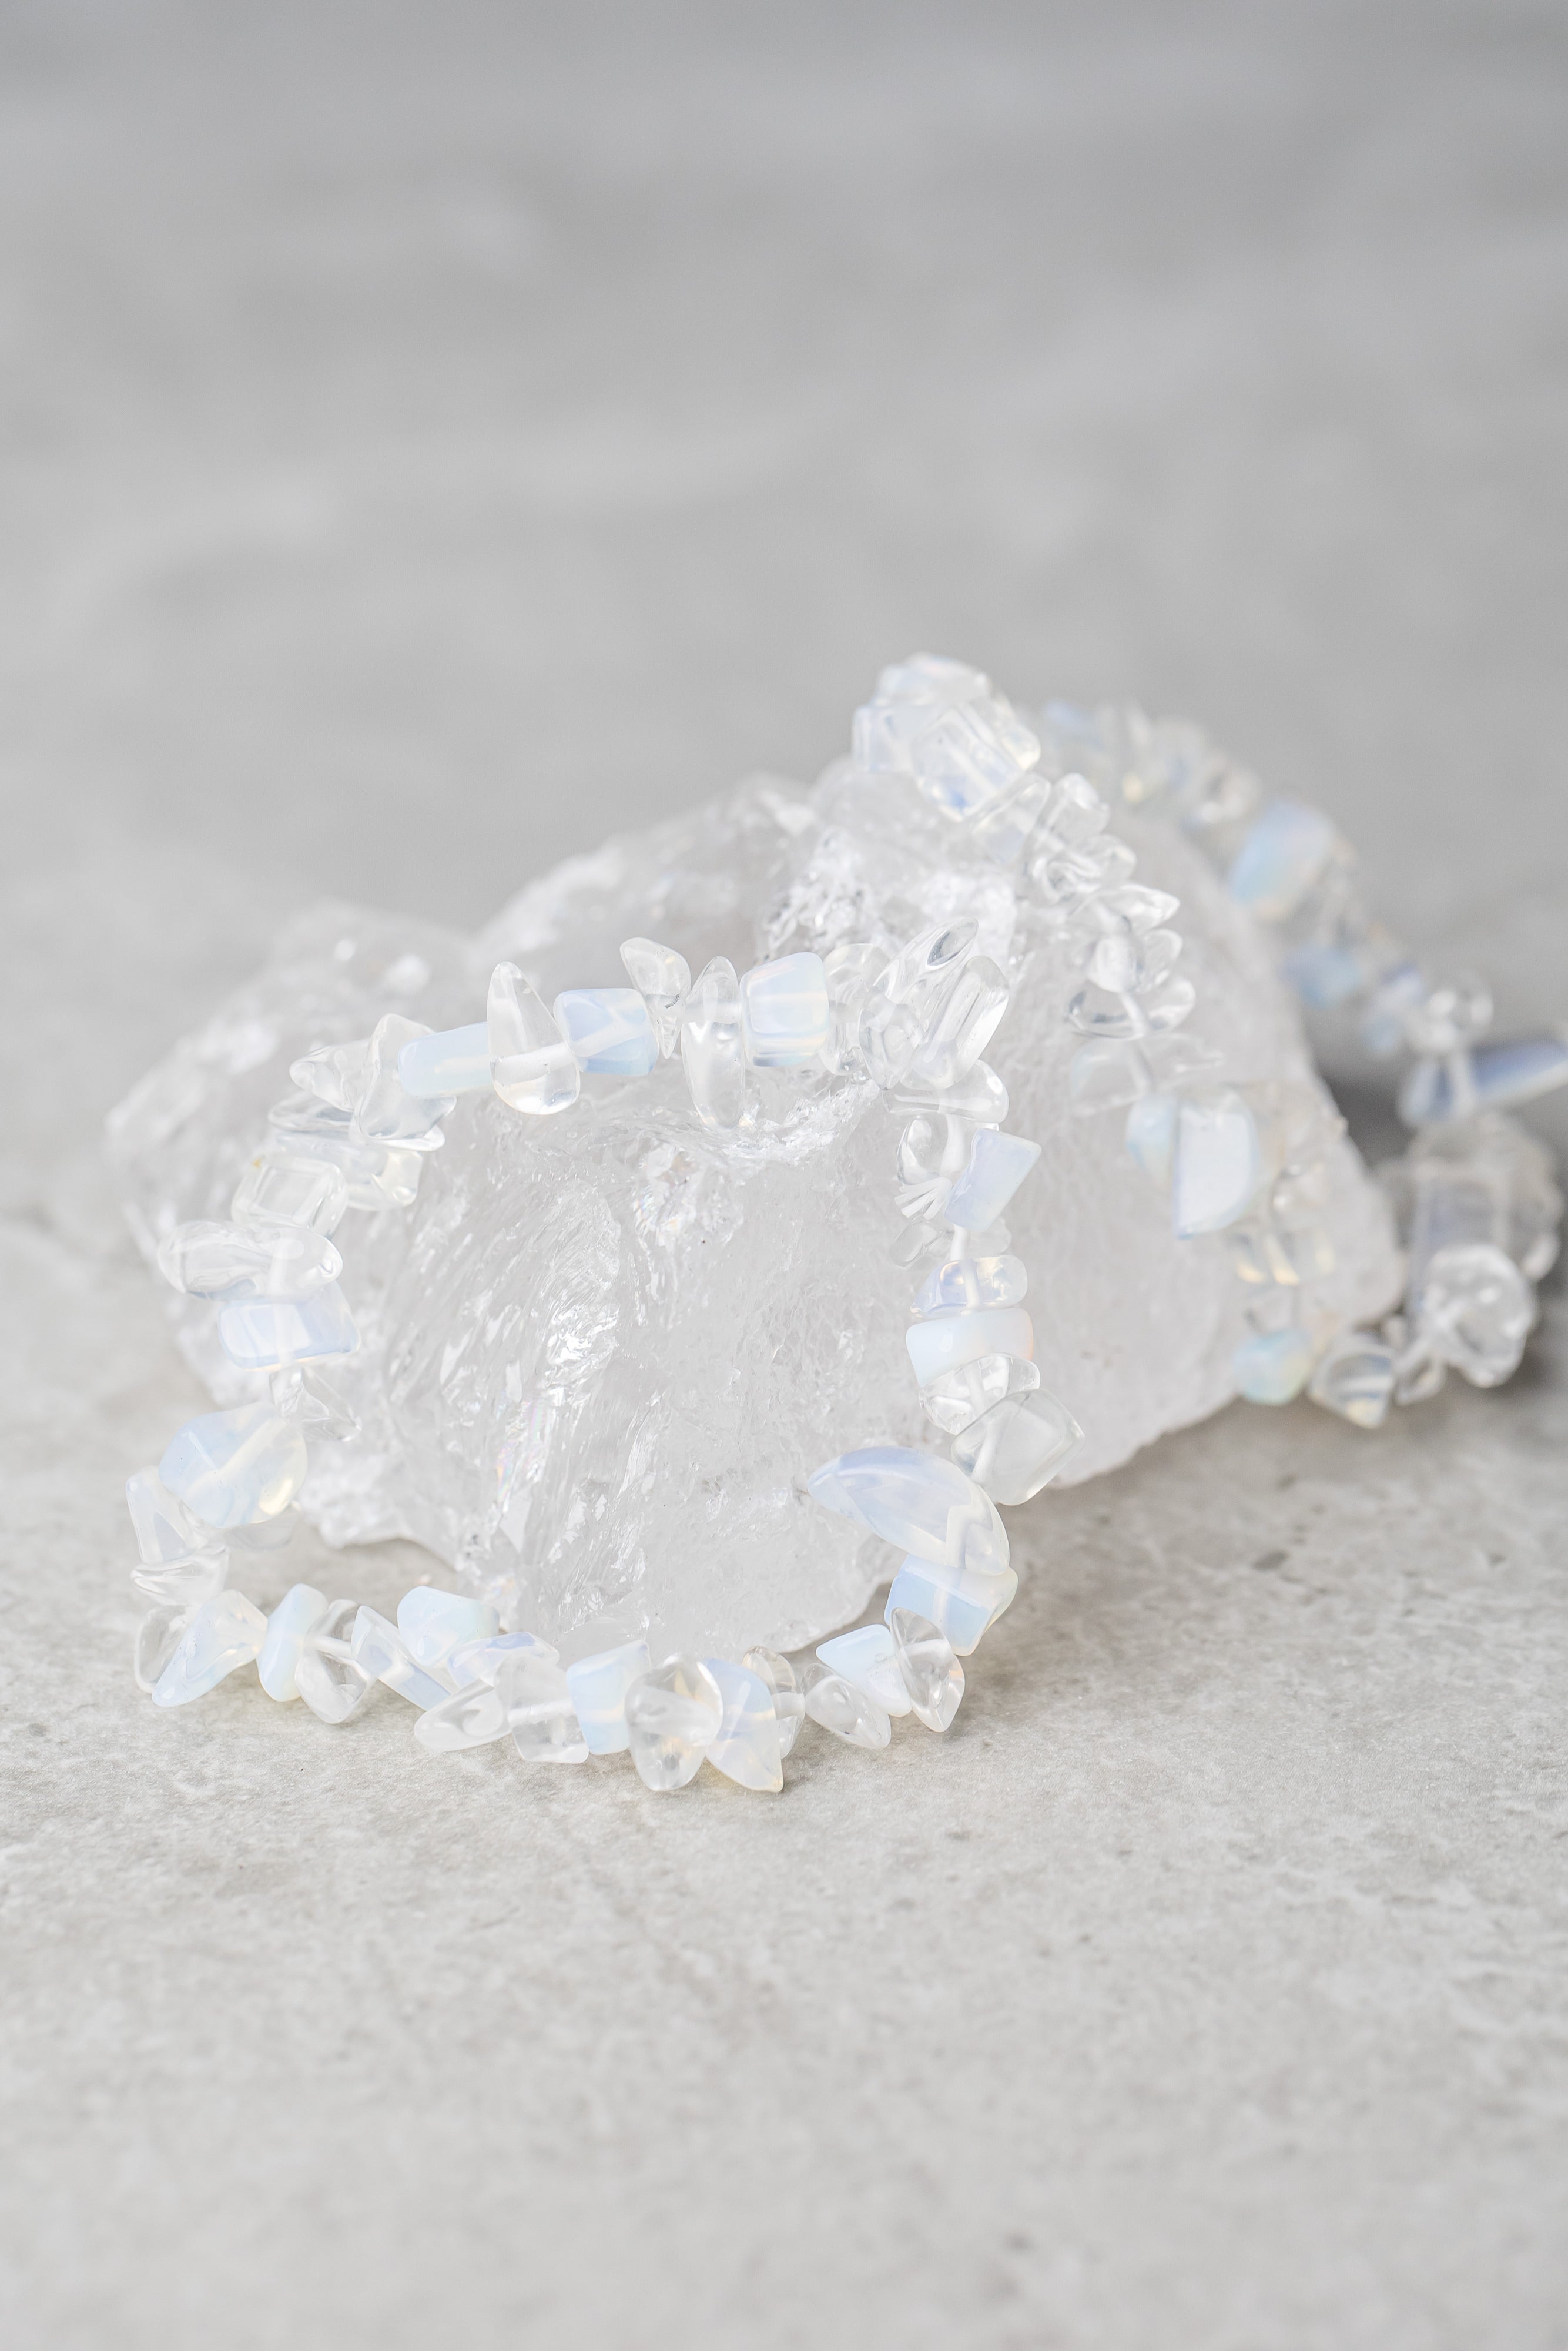 Opalite Chip Bracelet - Energetic Crystal for Transition, Communication & Emotional Balance - Everyday Rocks